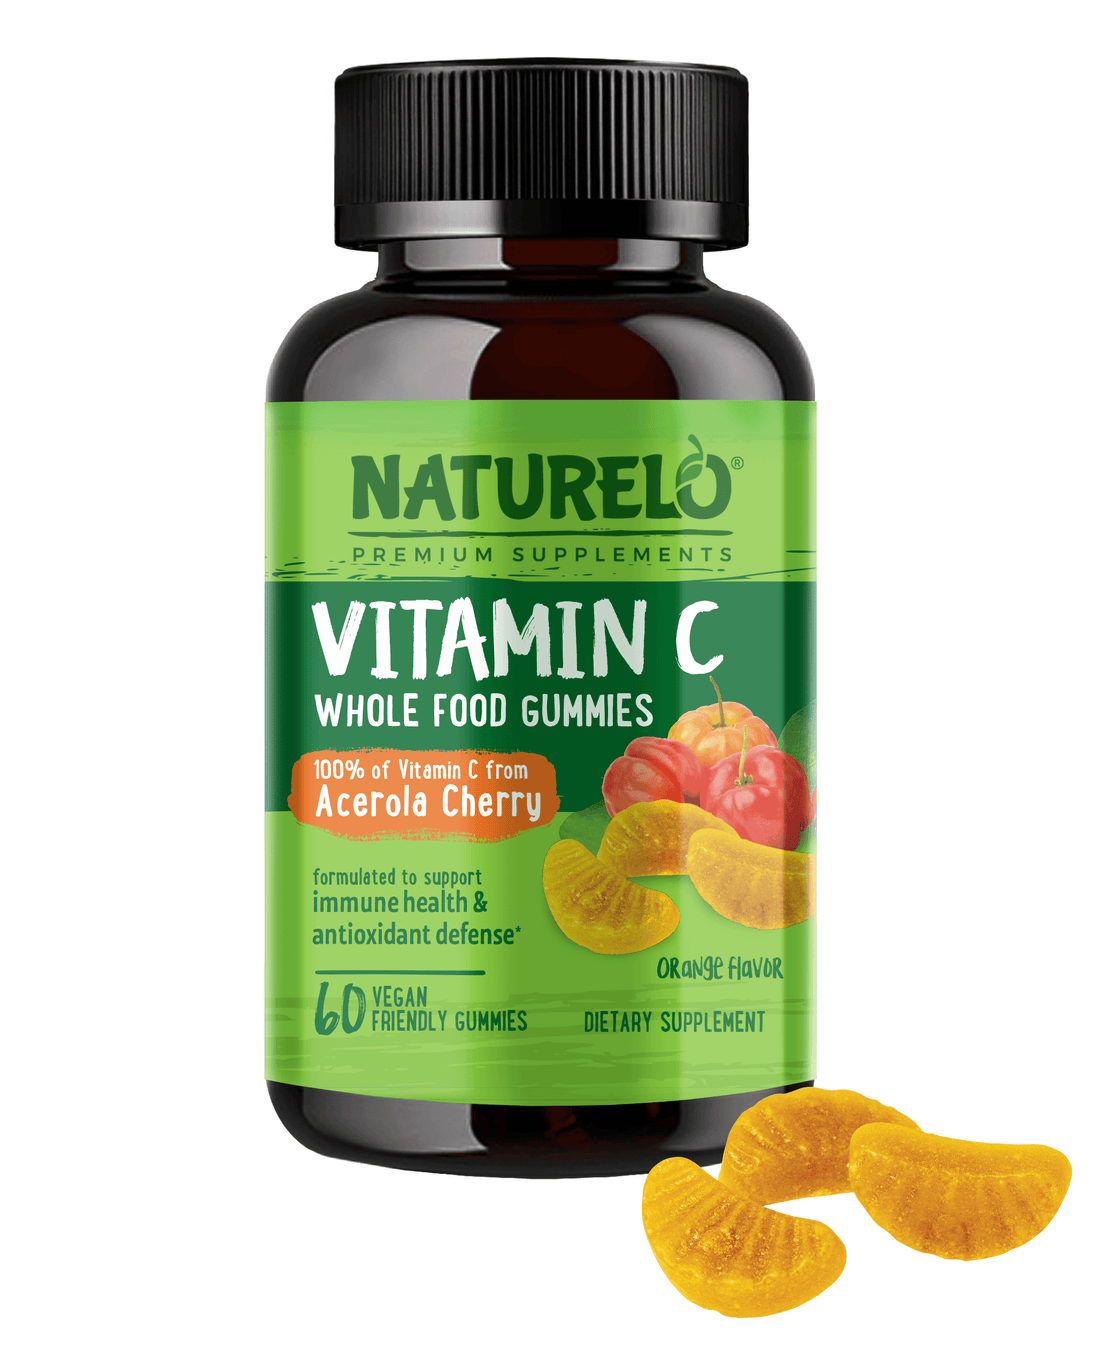 Whole Food Vitamin C Gummies Supplement